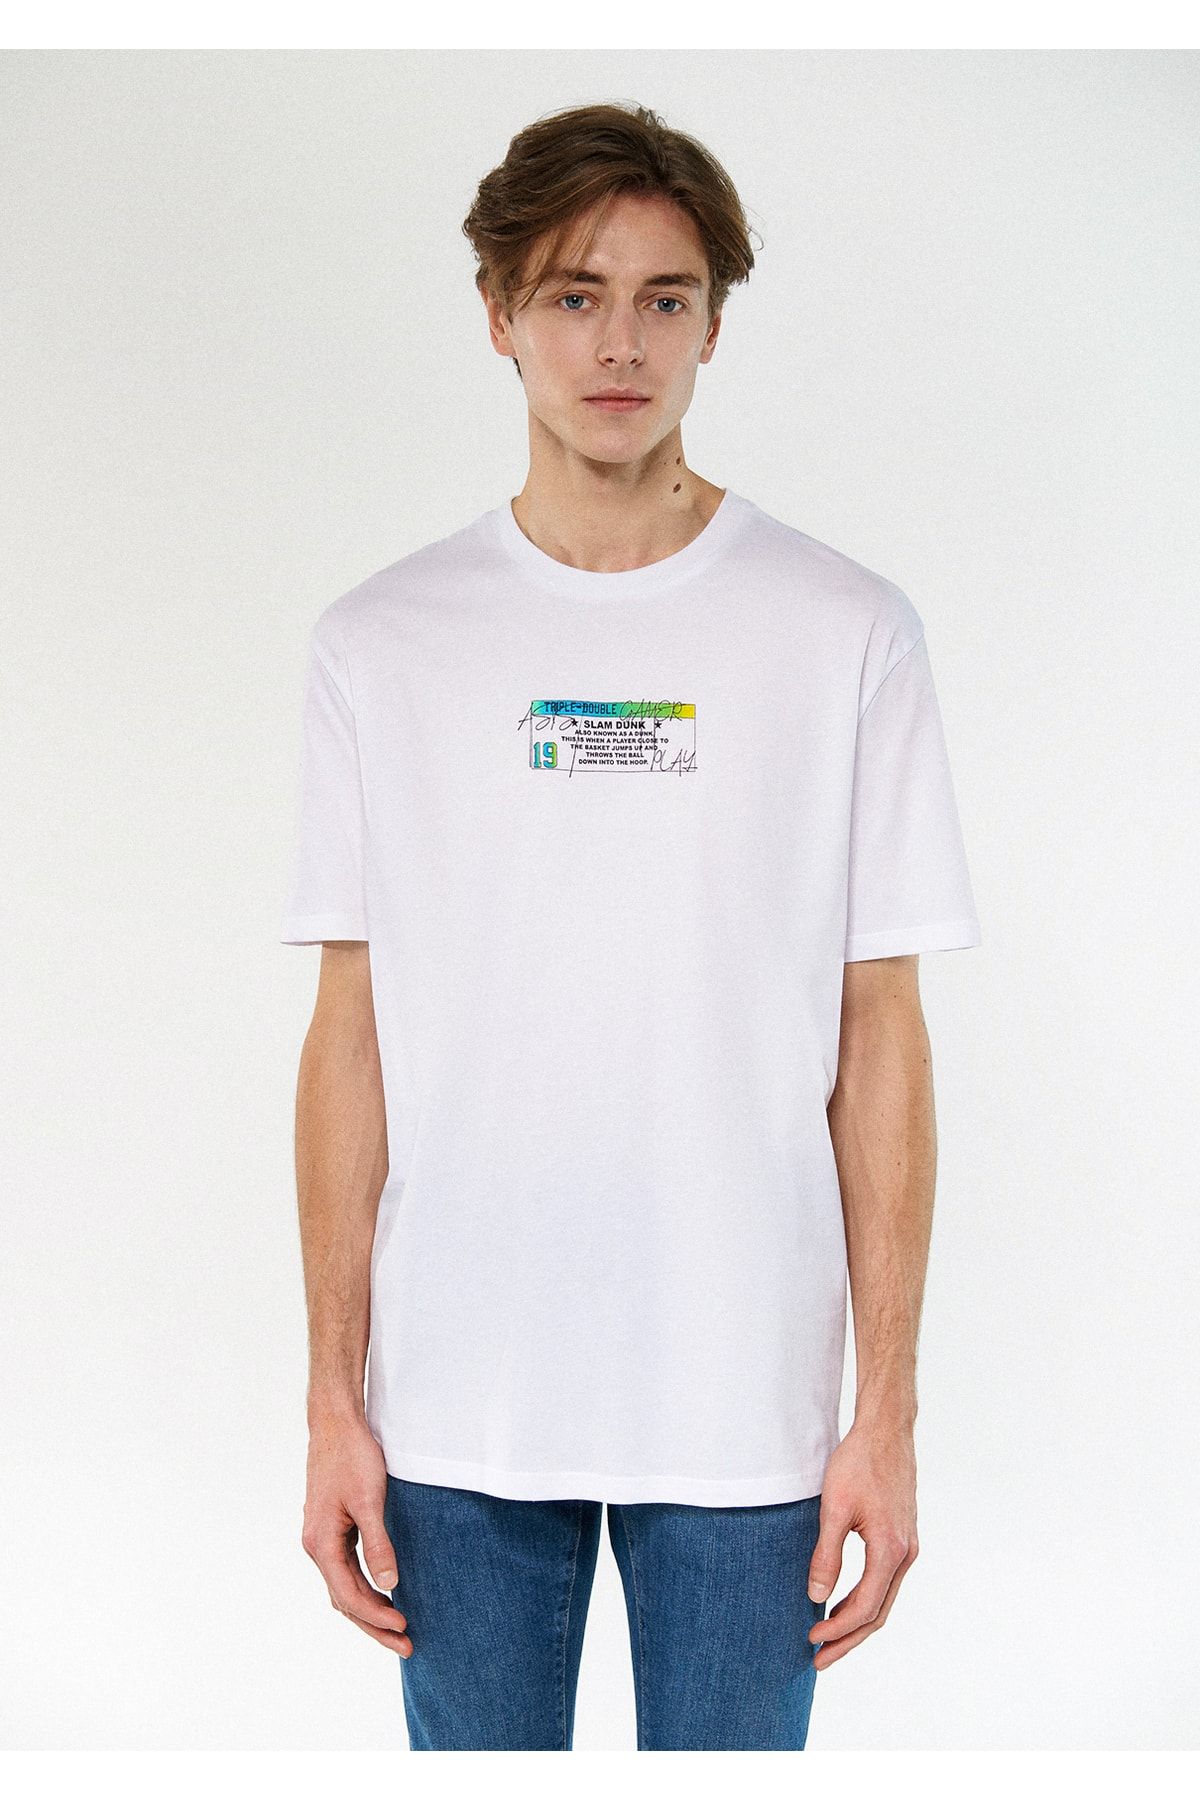 Mavi 91 تی شرت سفید چاپ شده تناسب / برش راحت و 0611106-620